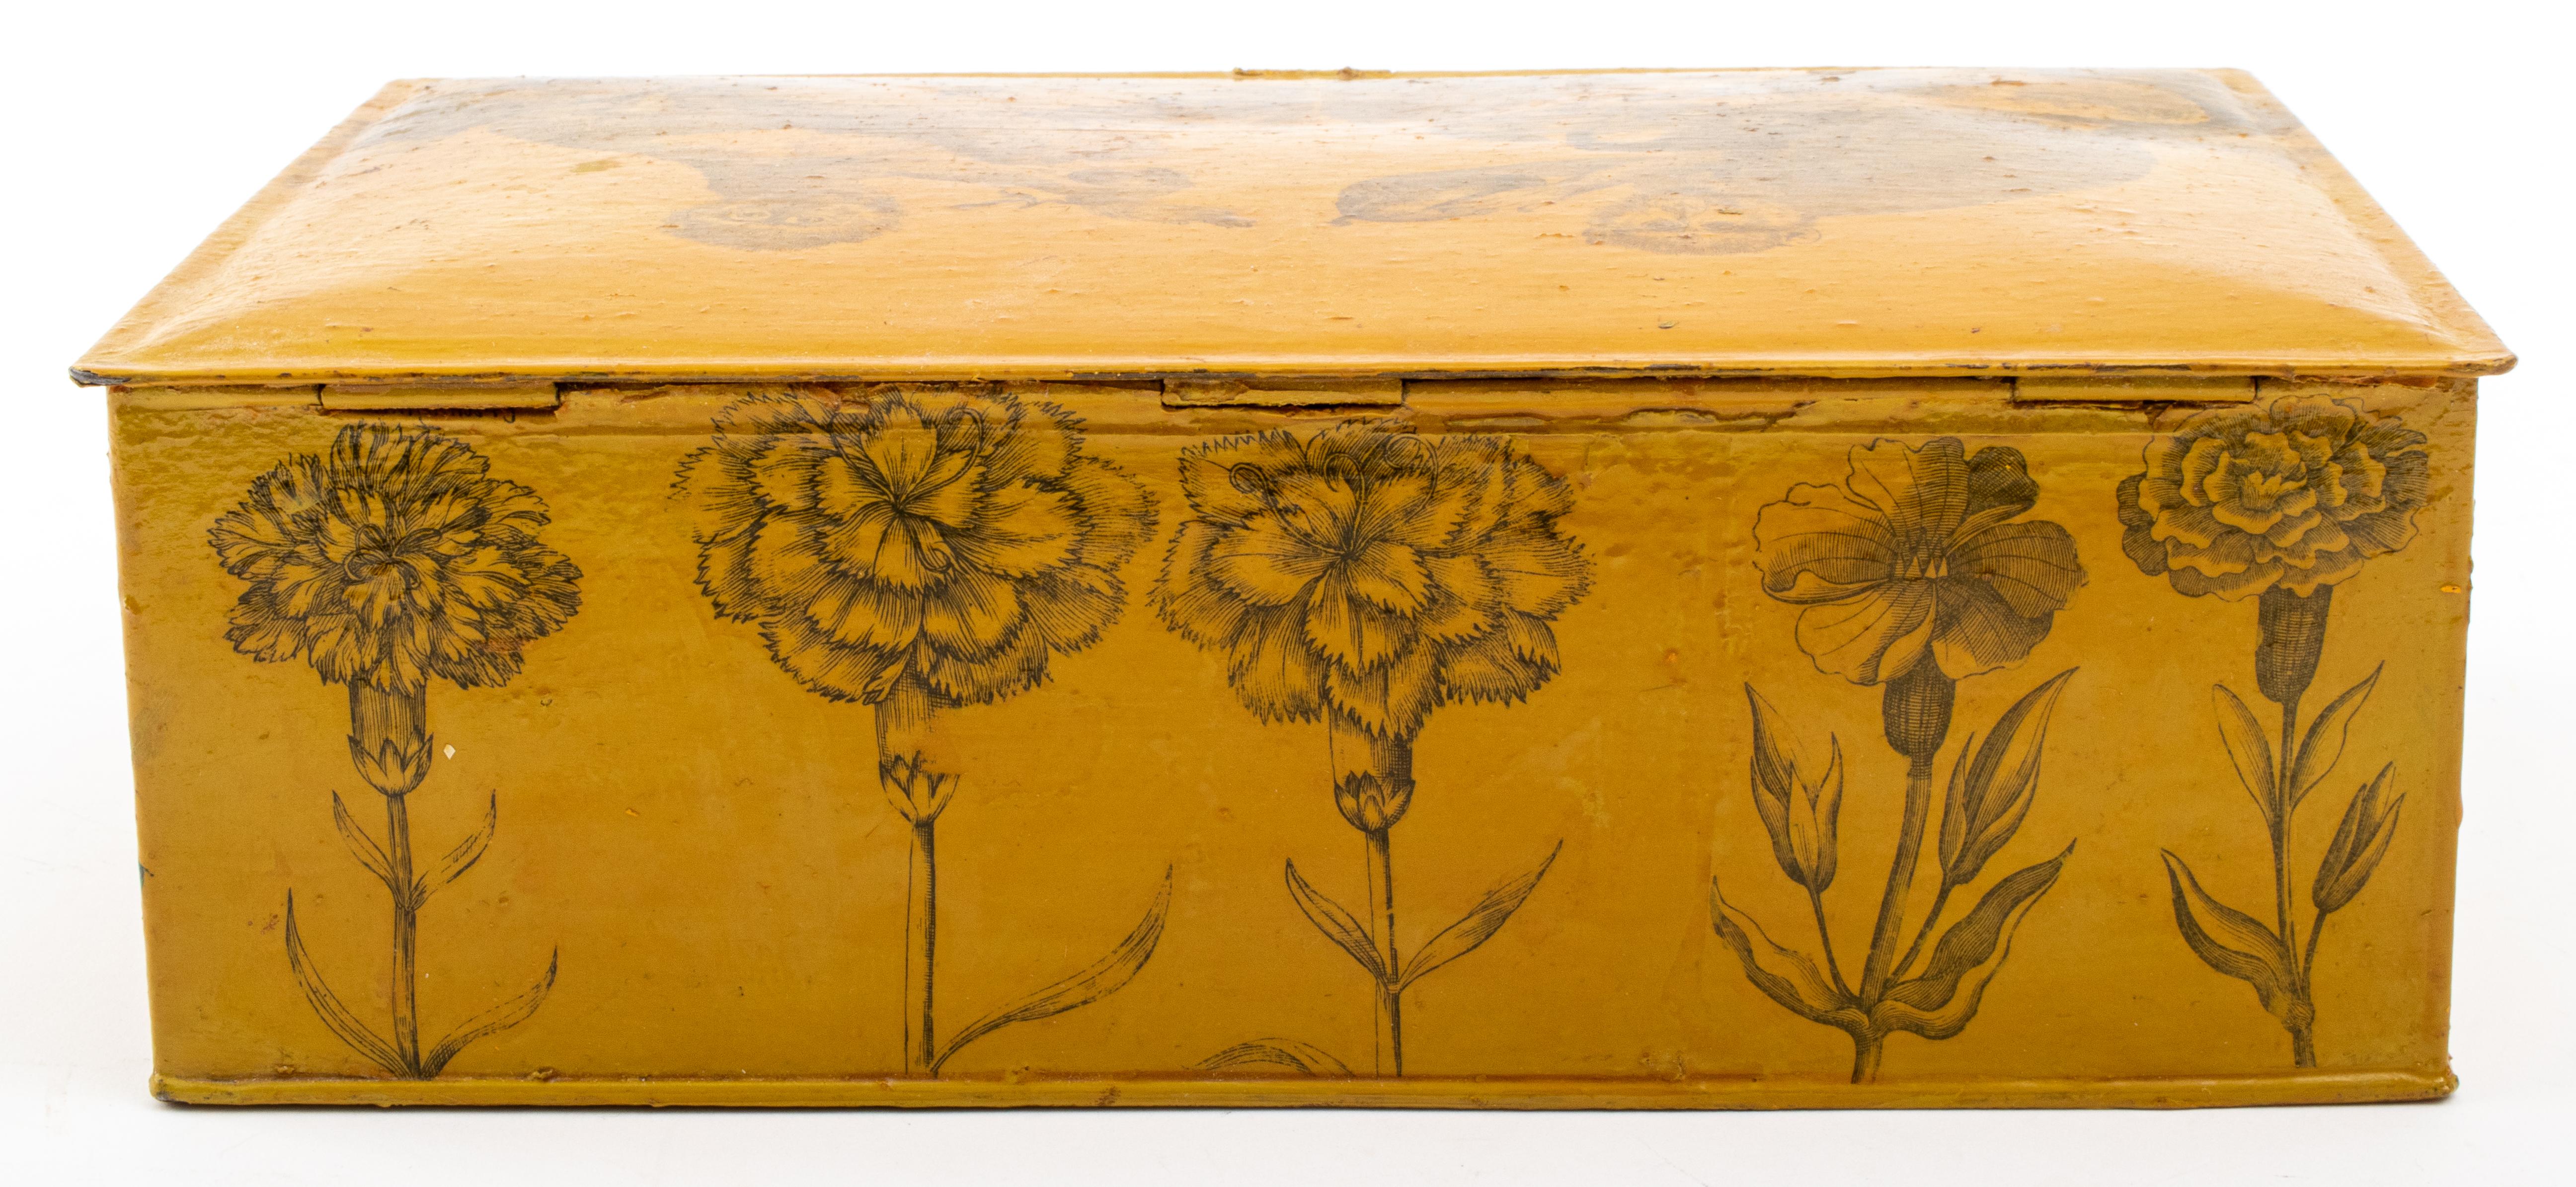 Decoupage-Decorated Painted Casket w/ Monkeys & Flowers For Sale 4